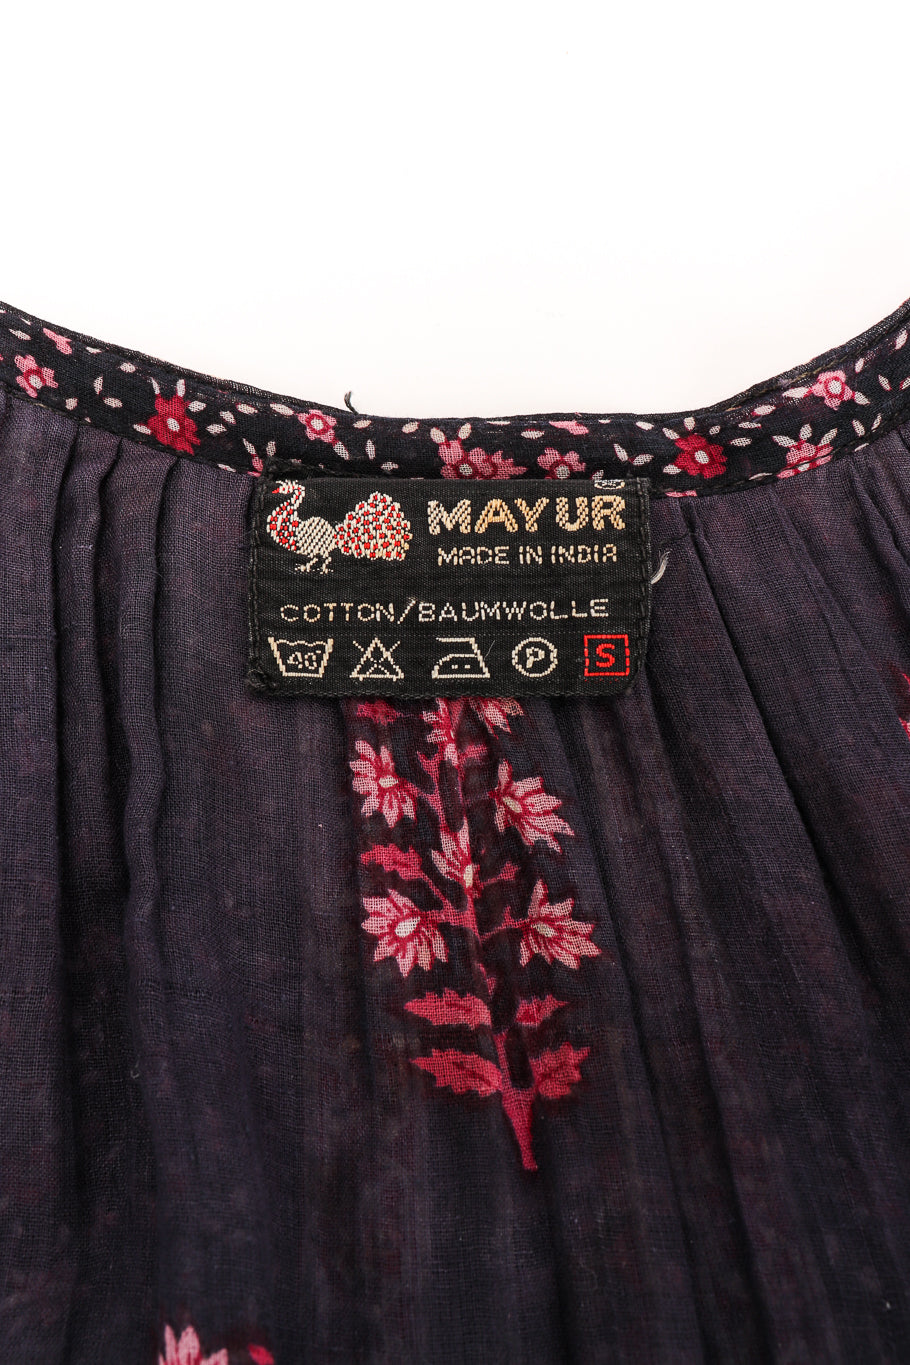 Cotton peasant dress by Mayur label @recessla